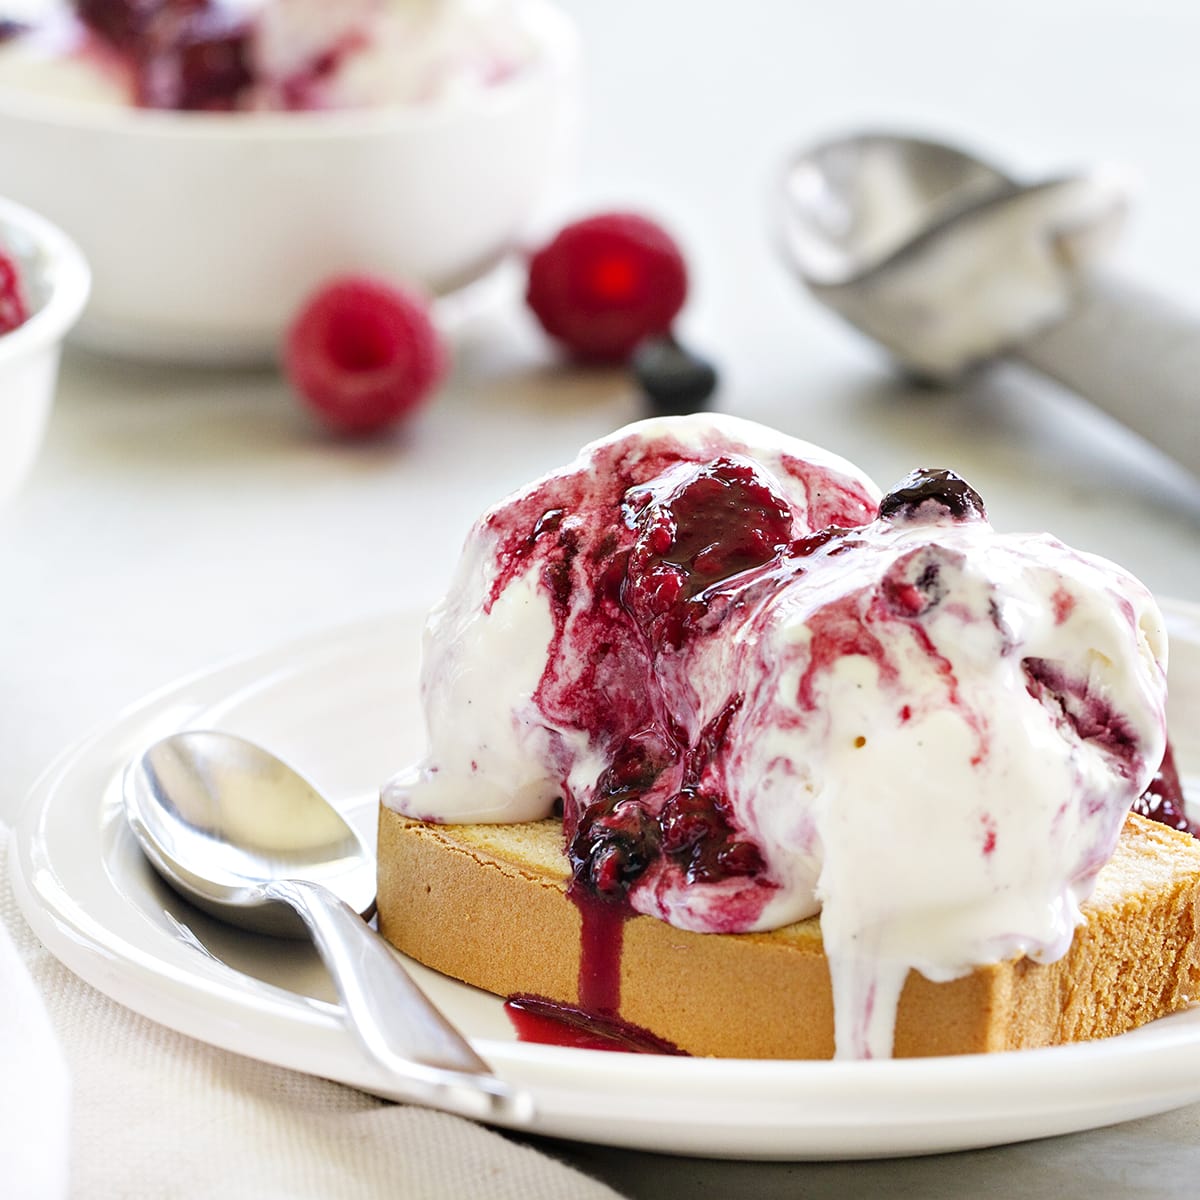 https://food-fanatic-res.cloudinary.com/iu/s--pX6UuN4---/c_thumb,f_auto,g_auto,h_1200,q_auto,w_1200/v1463479134/no-churn-roasted-berry-vanilla-bean-ice-cream-photo